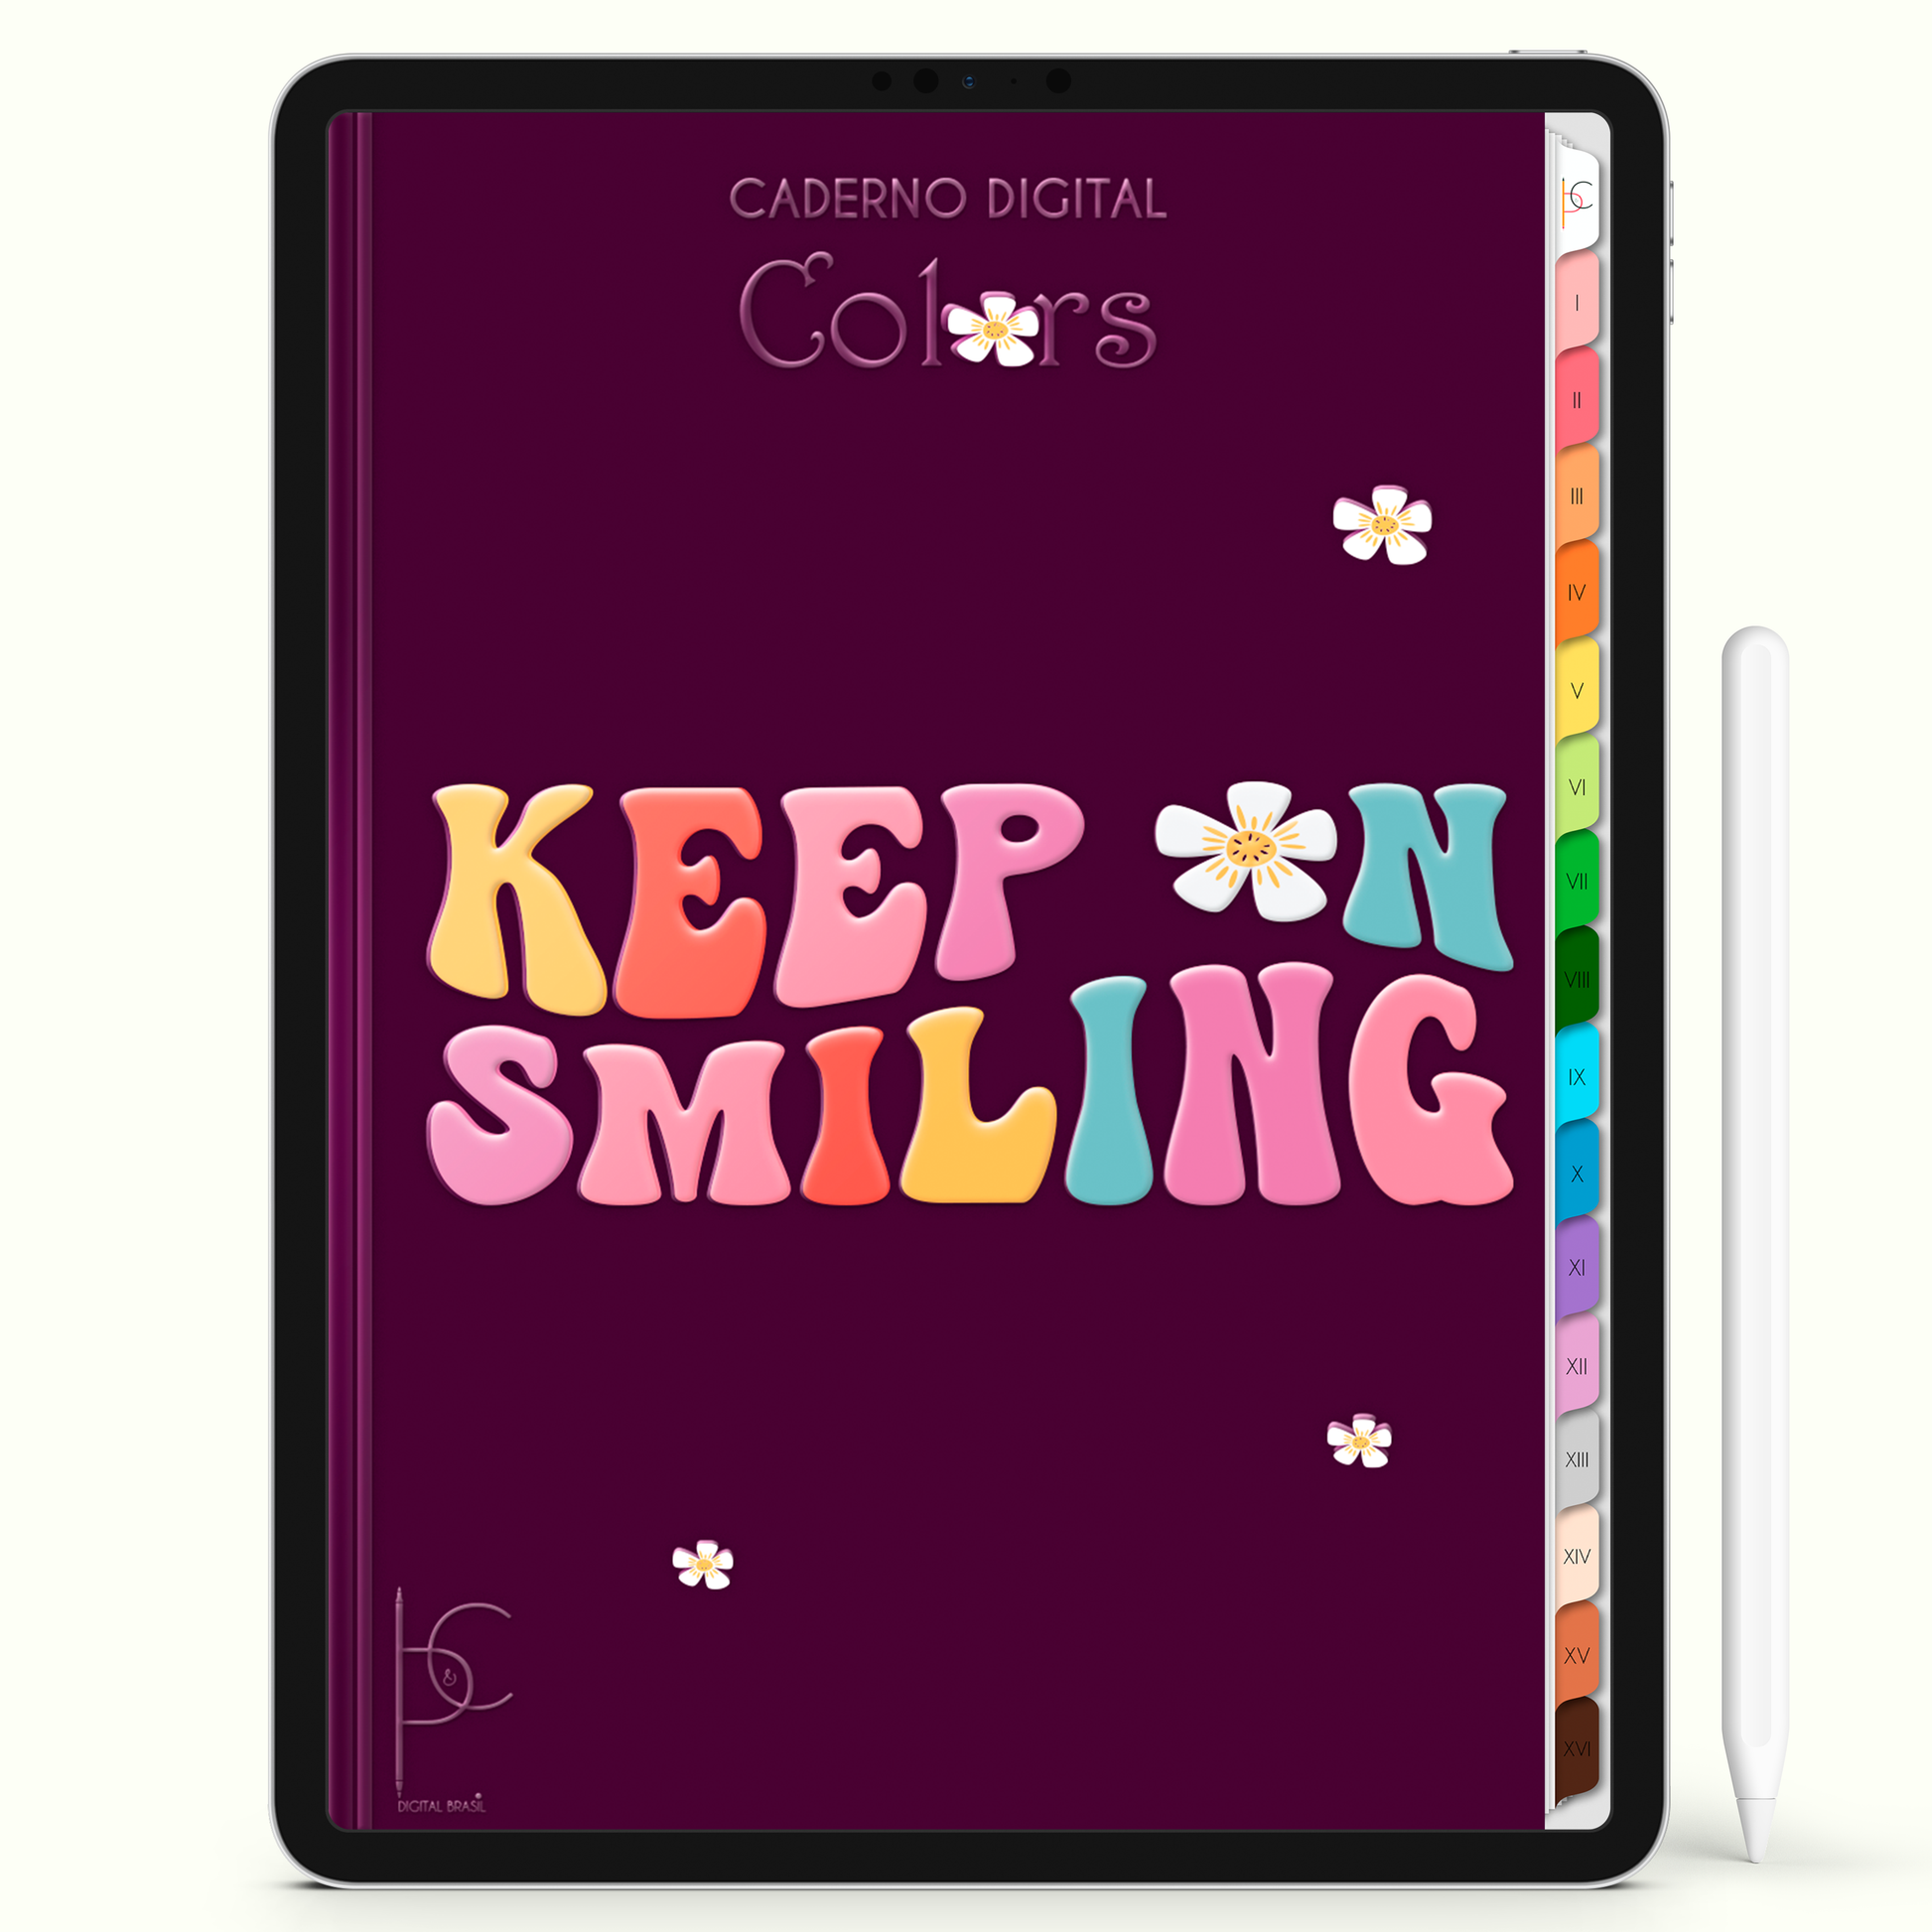 Caderno Digital Colors Keep On Smiling Continue Sorrindo 16 Matérias • Para iPad e Tablet Android • Download instantâneo • Sustentável